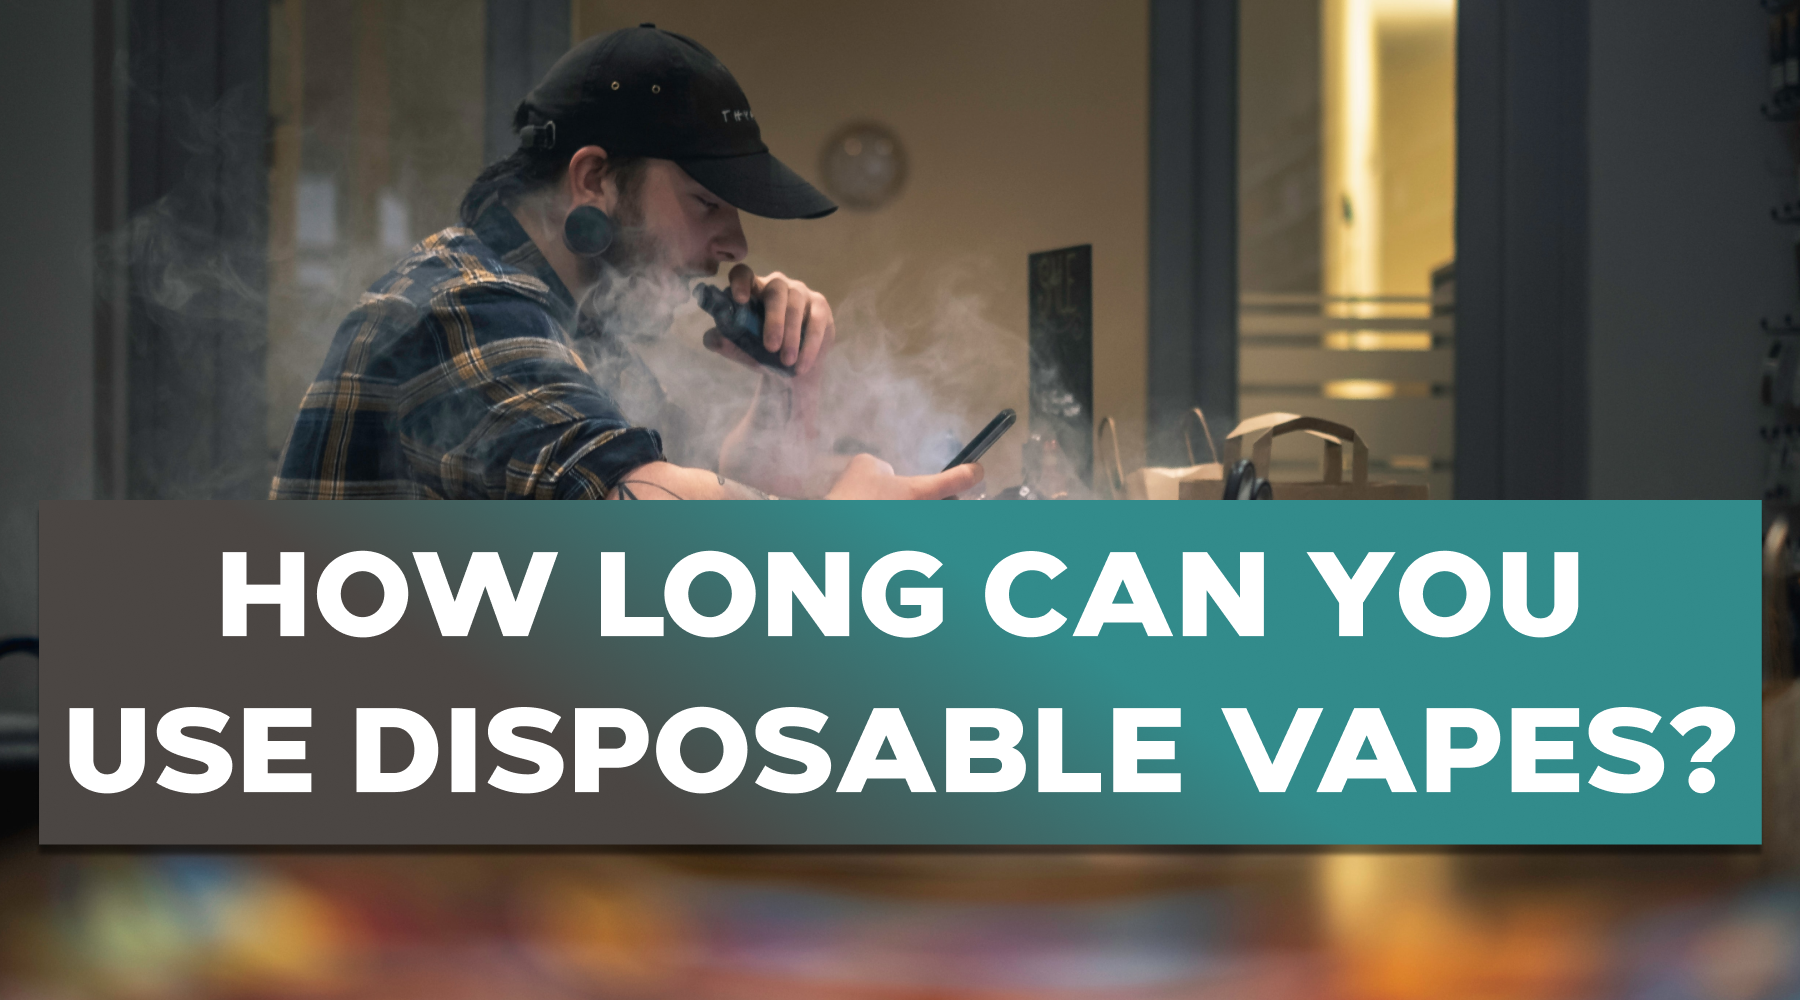 How long does a disposable vape last